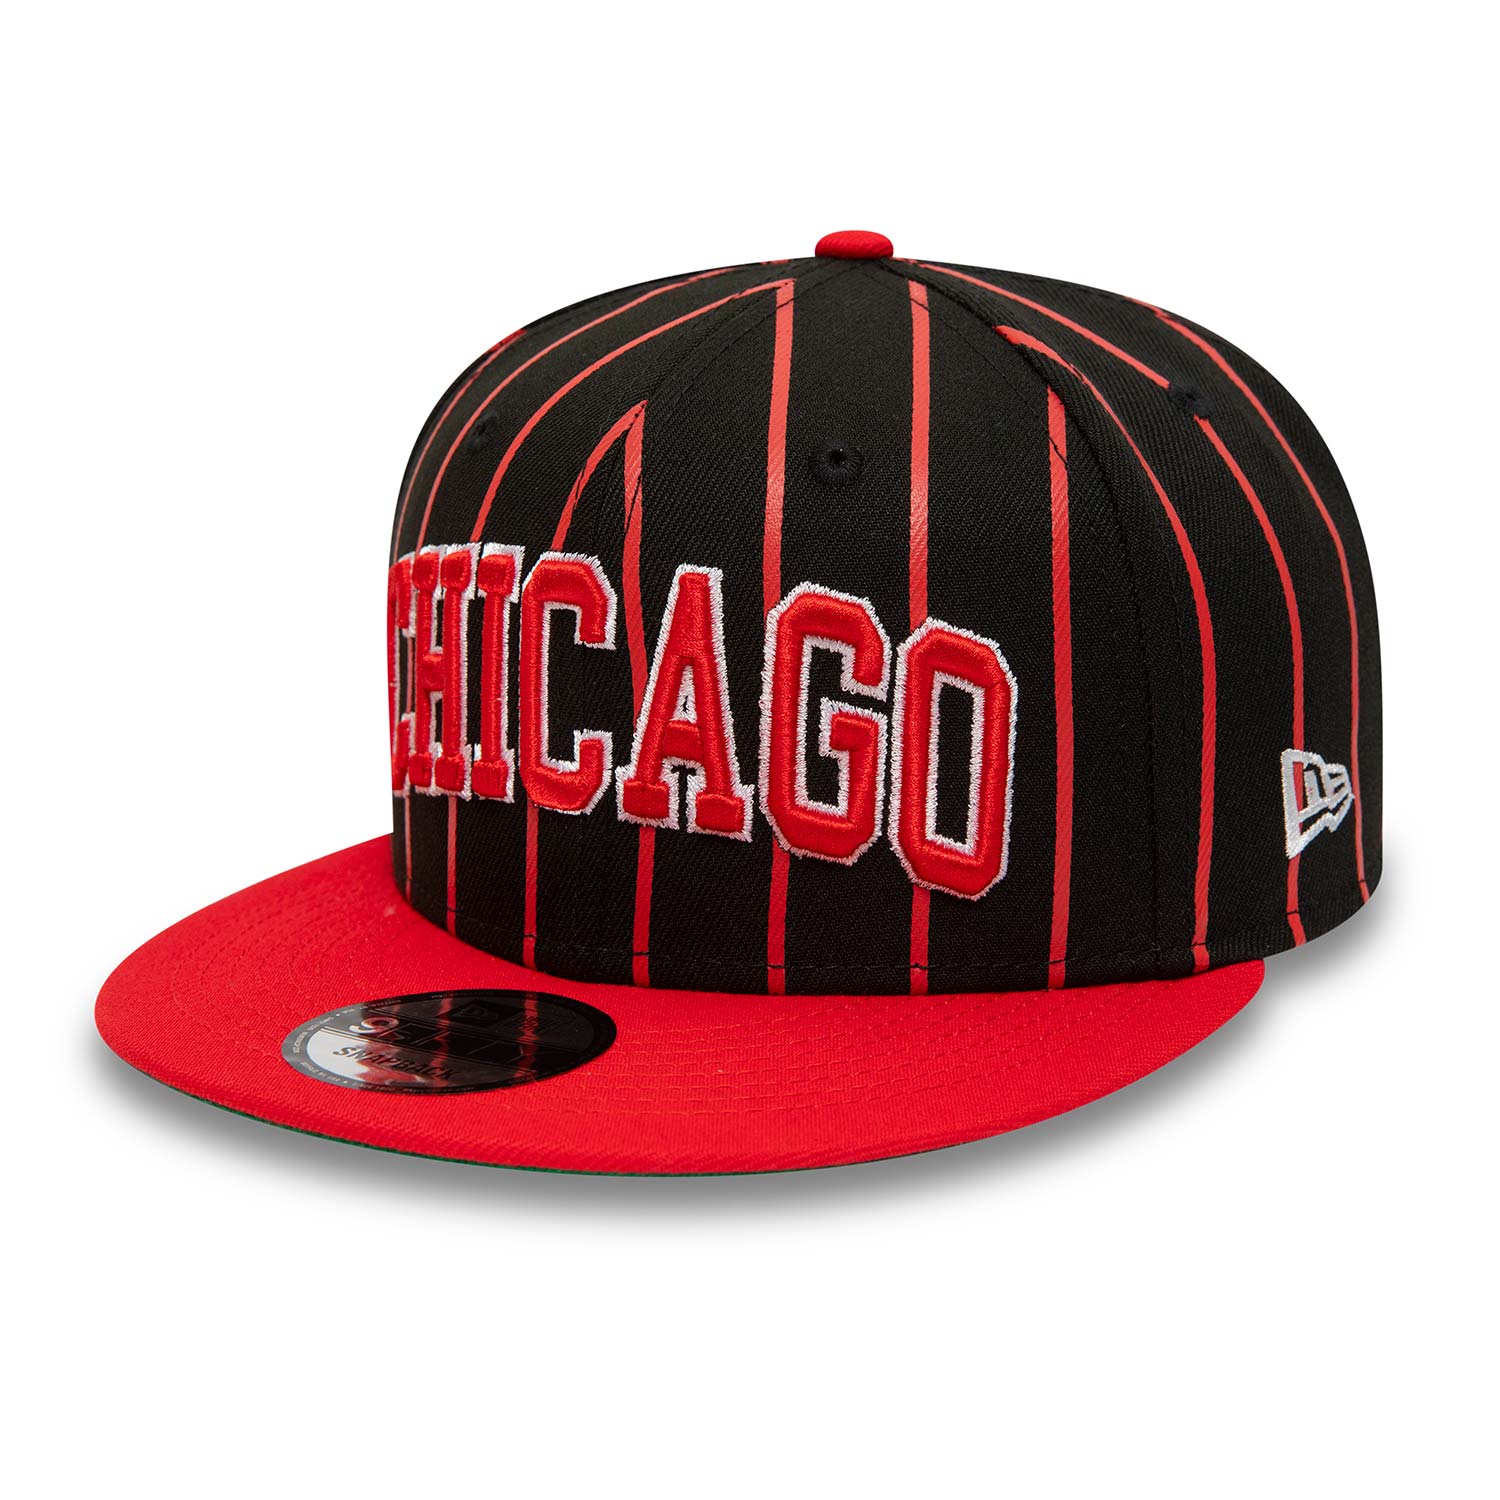 Chicago Bulls City Arch Black 9FIFTY Snapback Cap